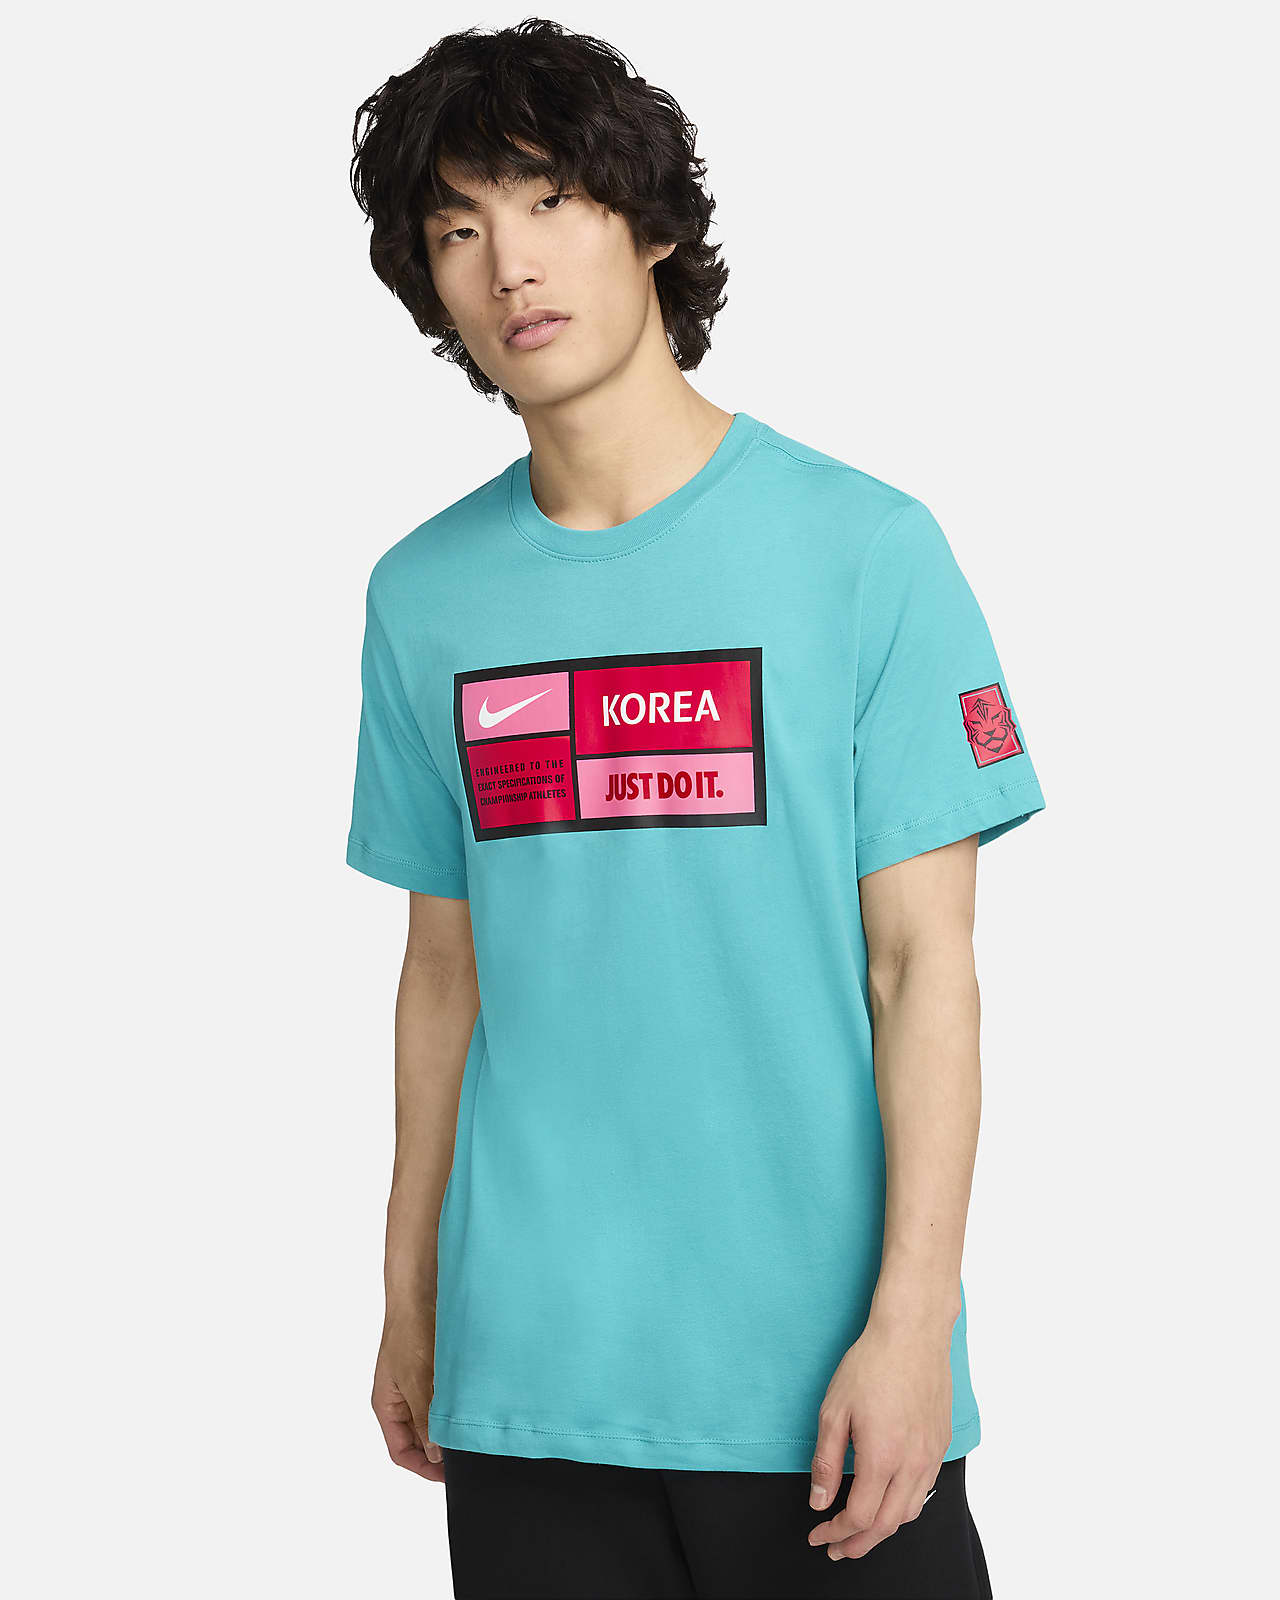 Korea Men's Nike Football T-Shirt